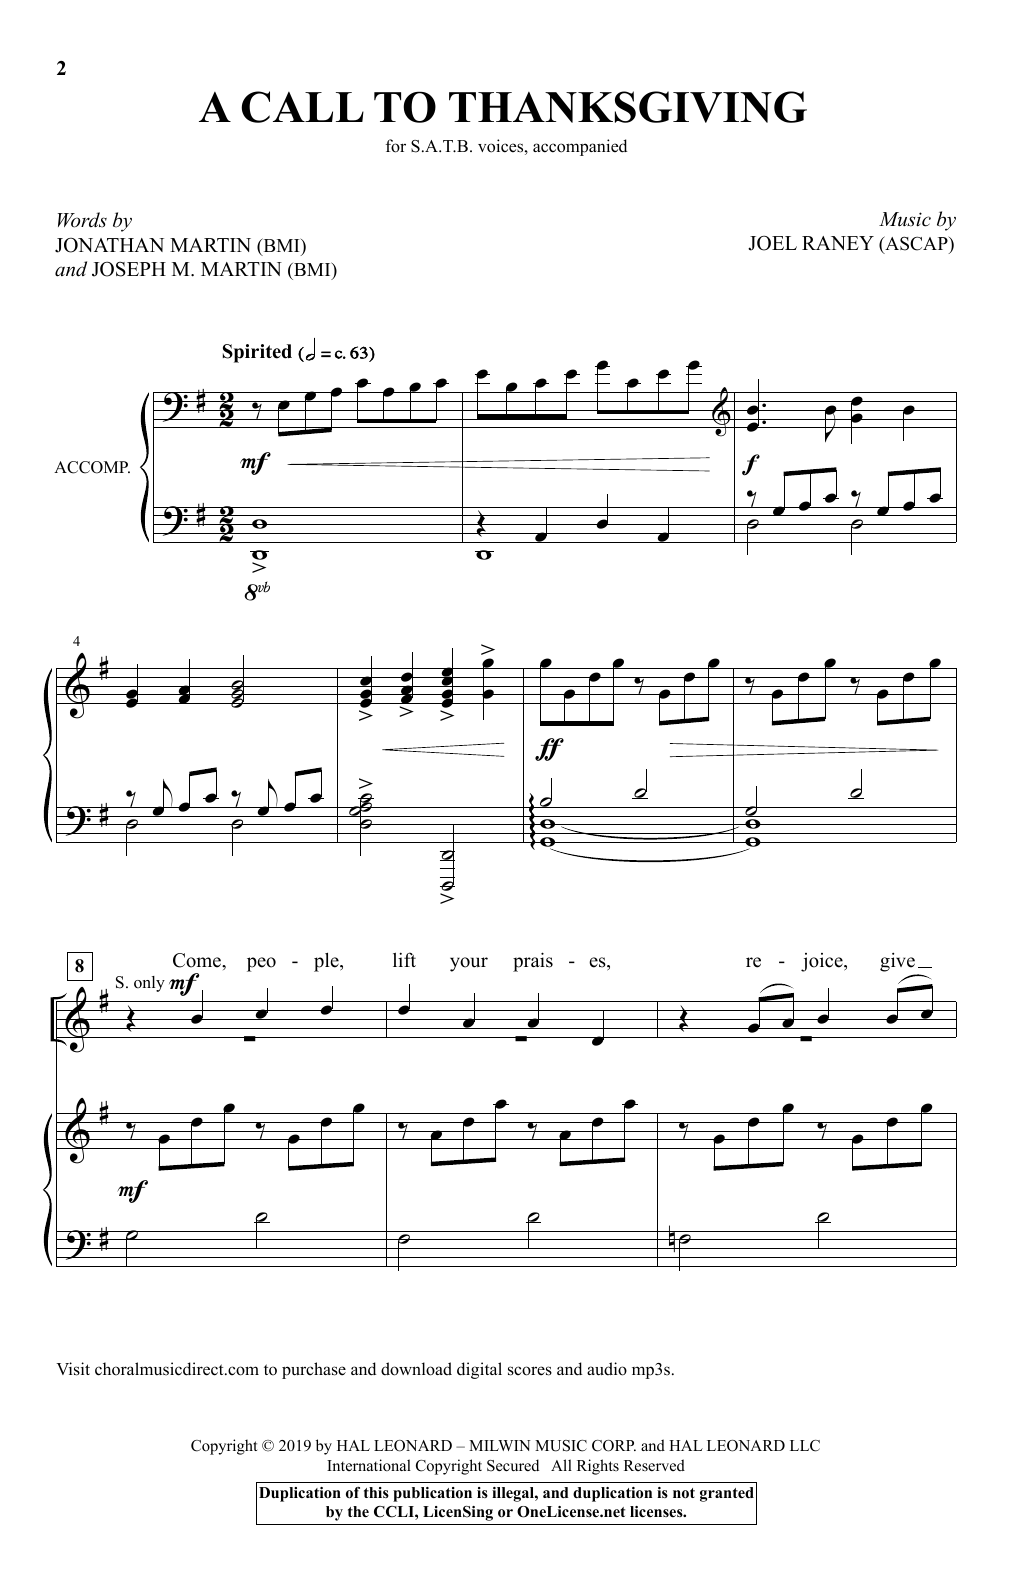 Joseph M. Martin A Call To Thanksgiving sheet music notes and chords arranged for SATB Choir